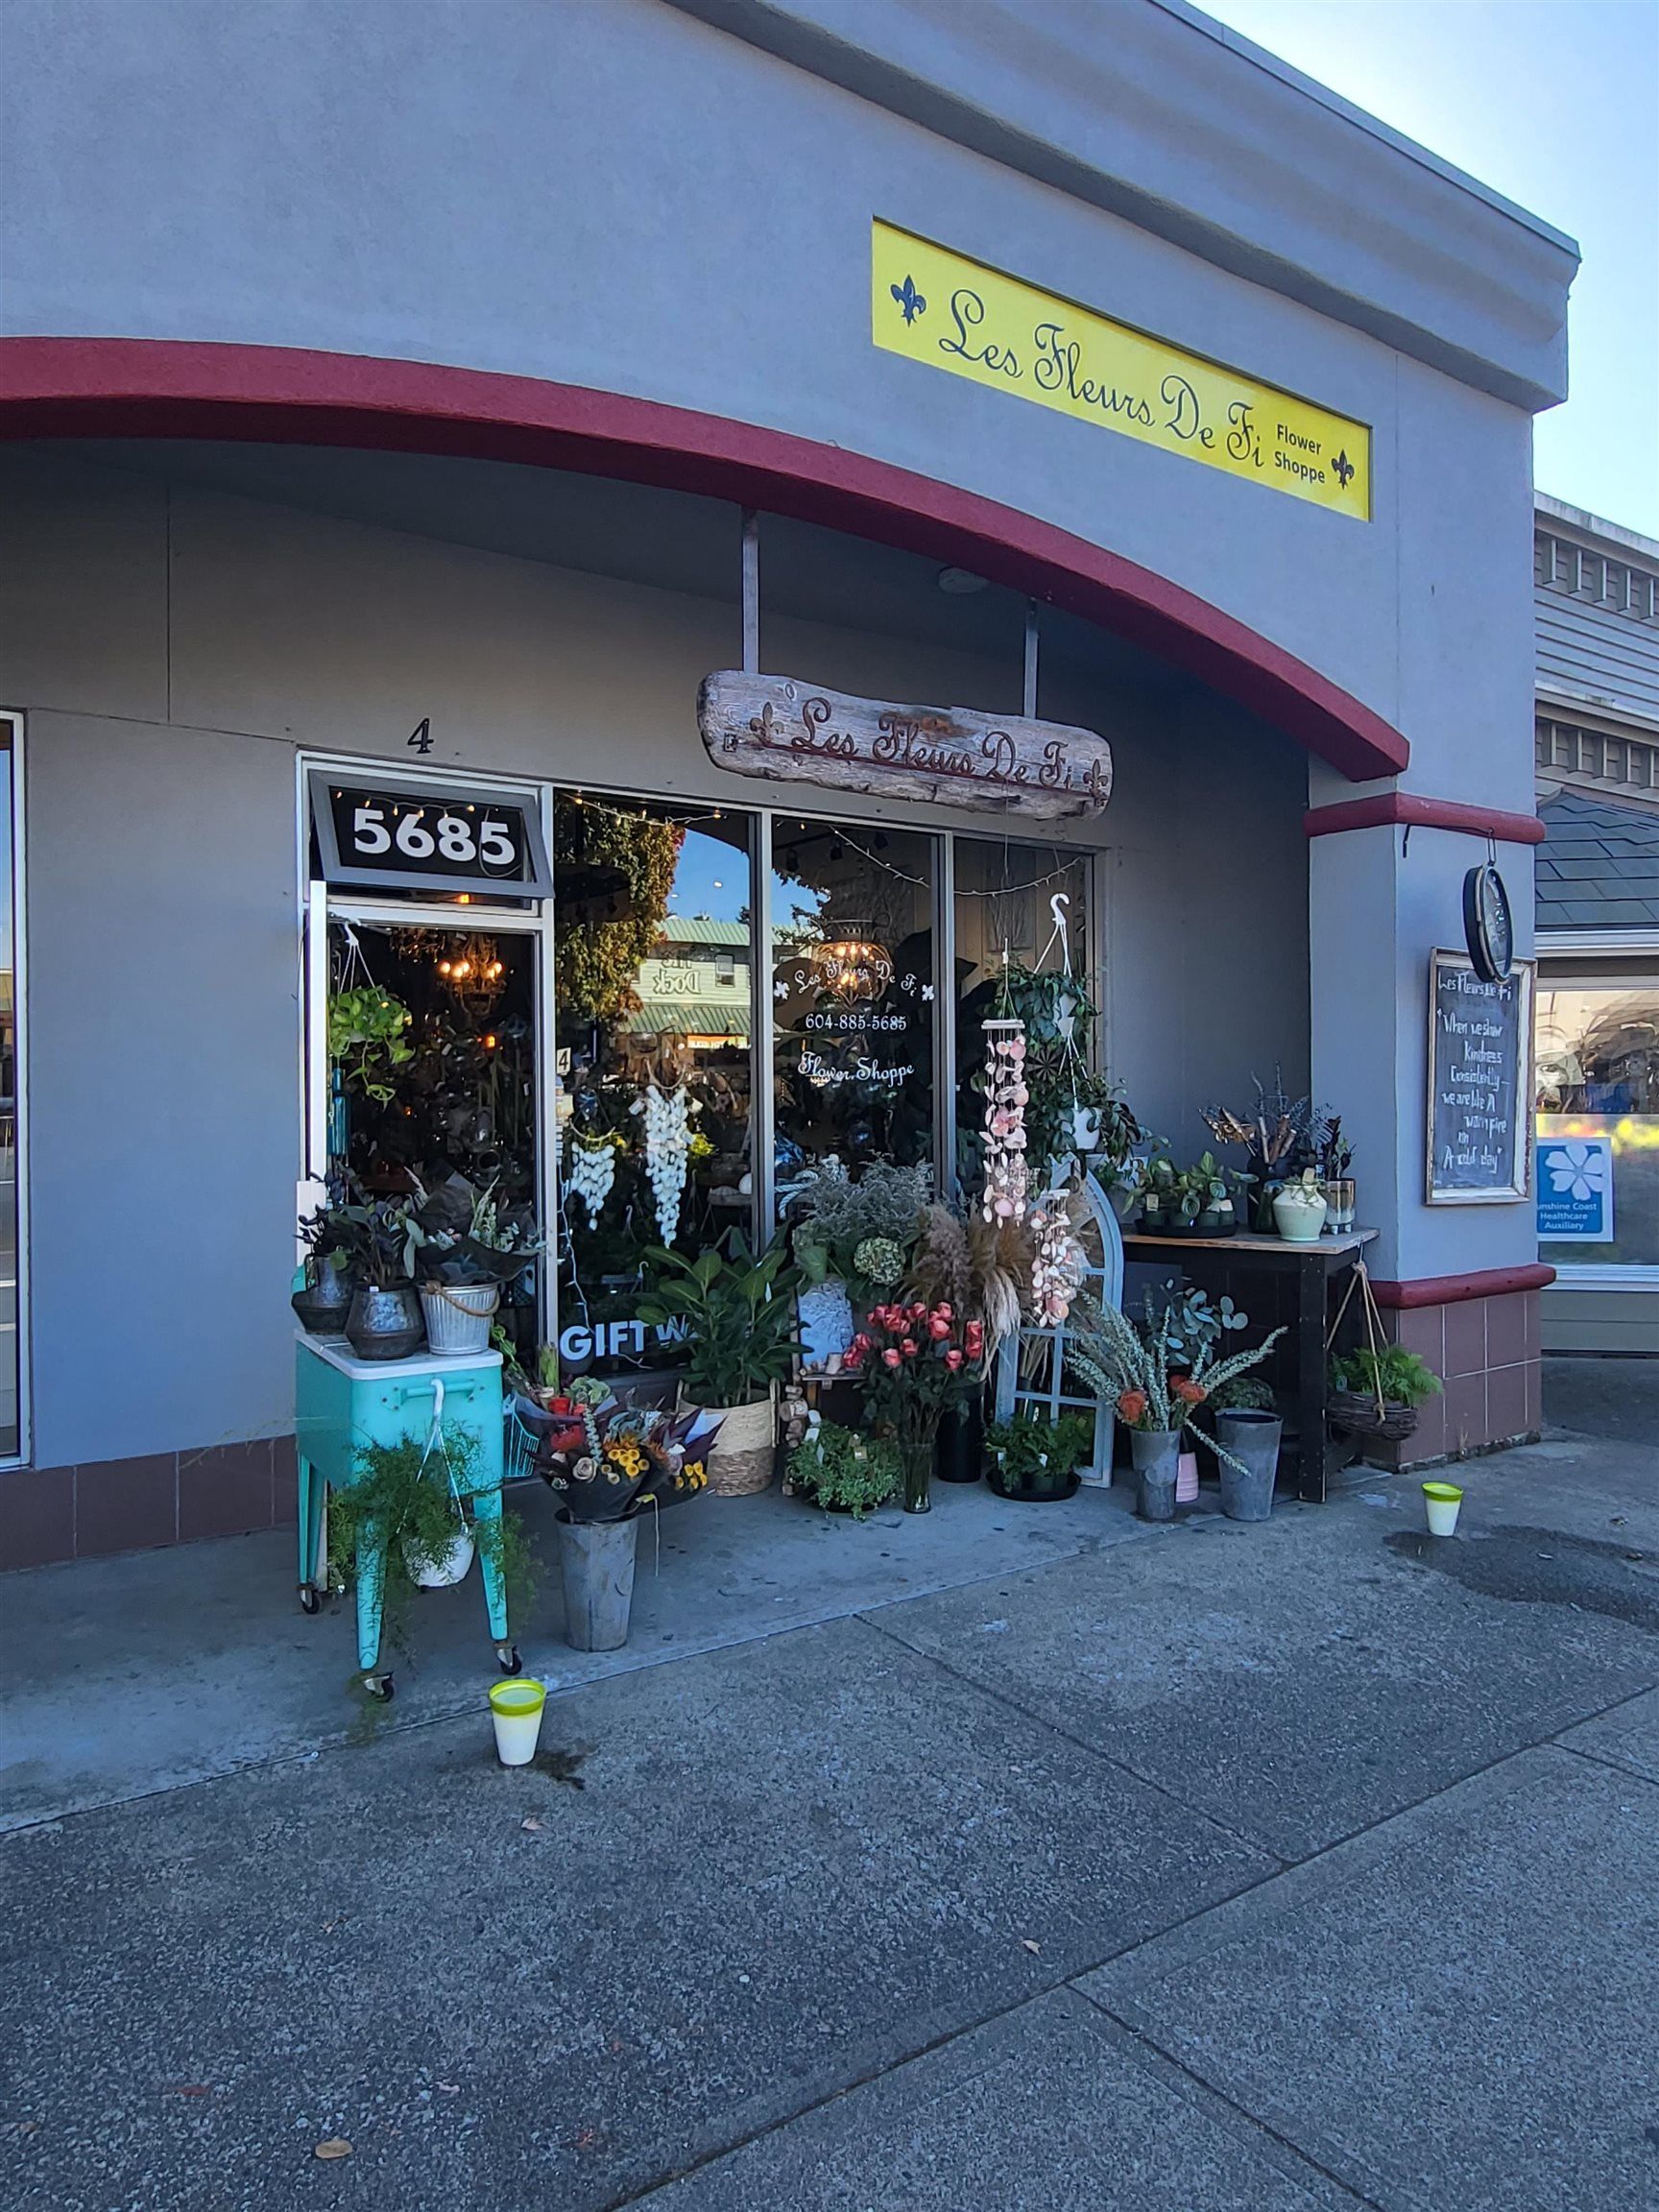 Main Photo: 4 5685 COWRIE Street in Sechelt: Sechelt District Retail for sale (Sunshine Coast)  : MLS®# C8046781